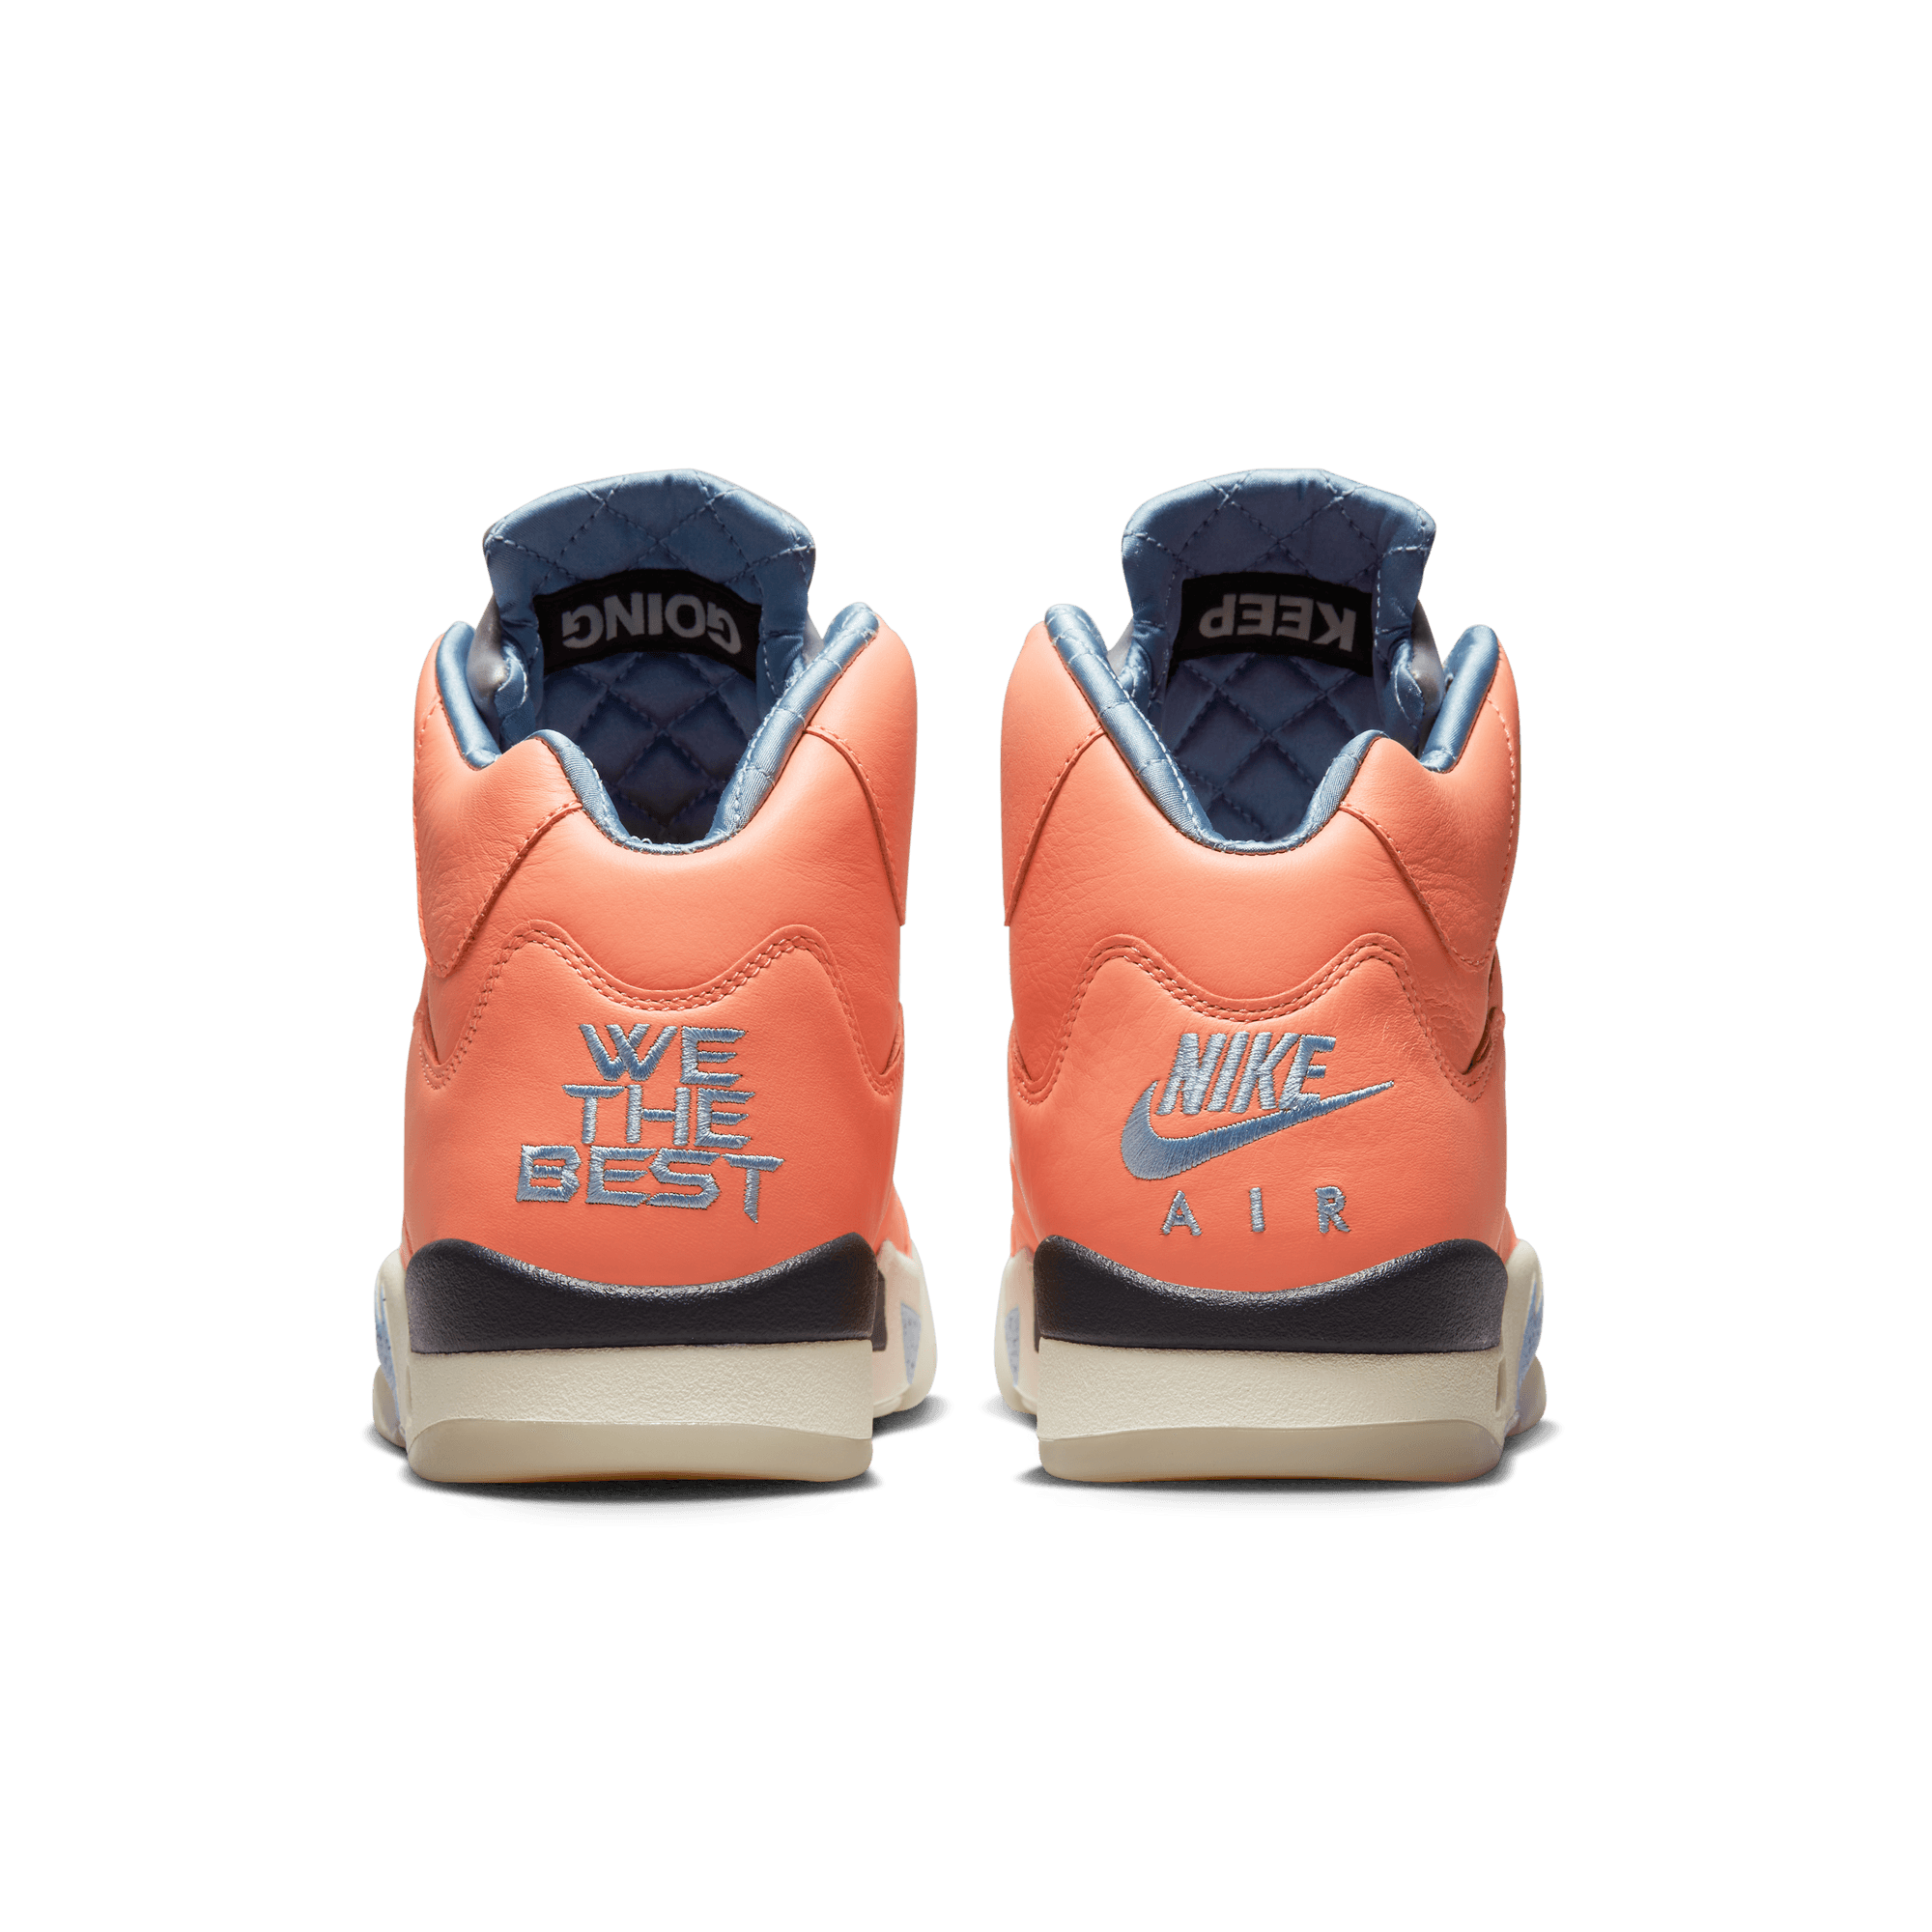 Air Jordan 5 x DJ Khaled Men's Shoes Crimson Bliss